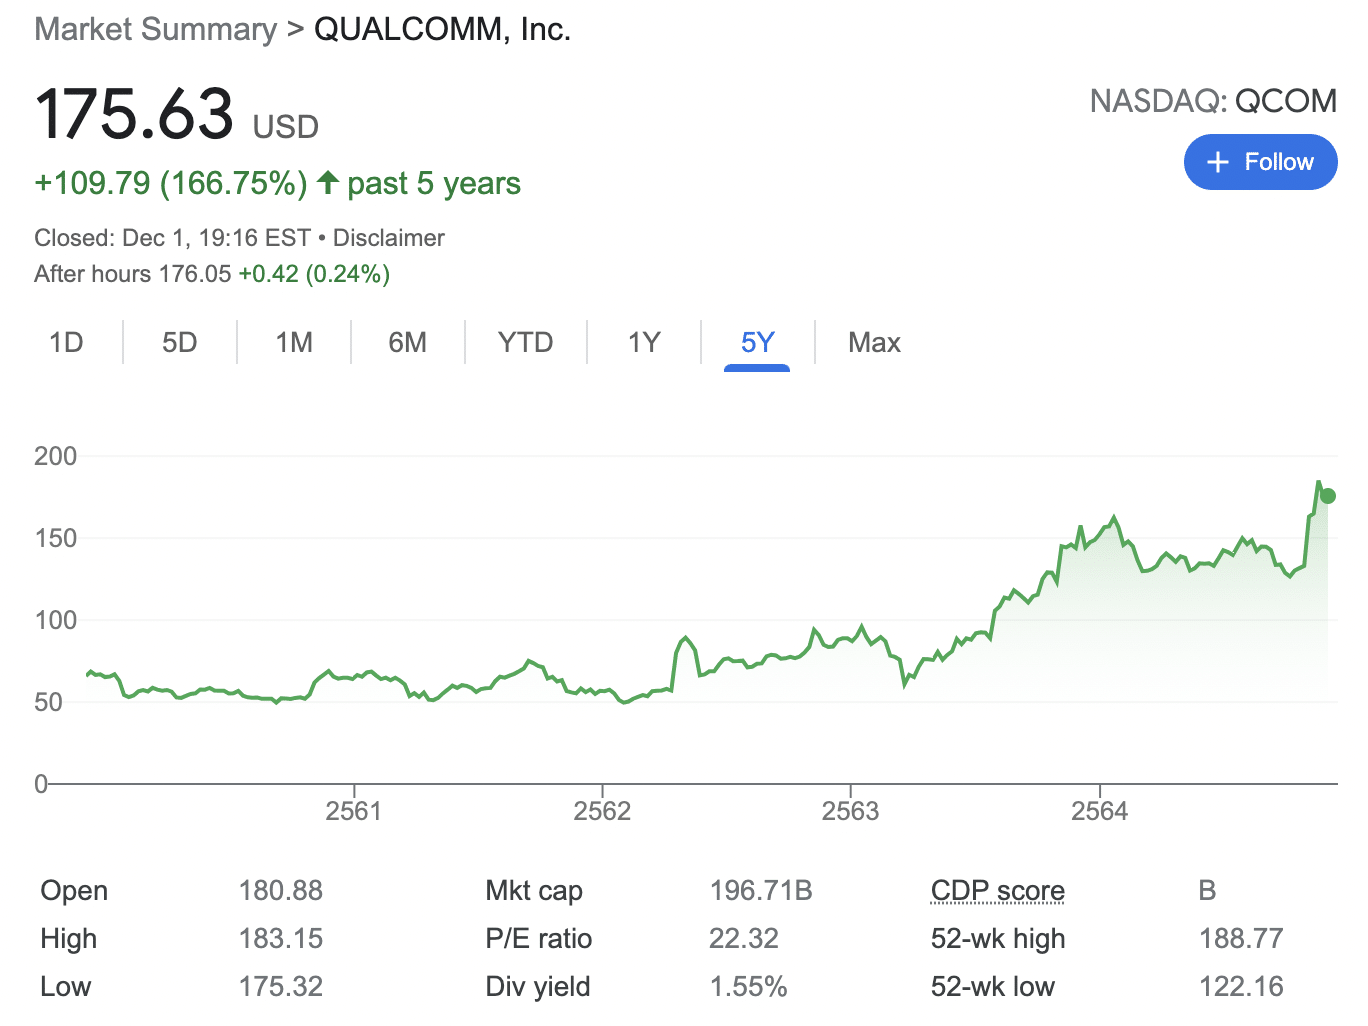 Qualcomm stocks